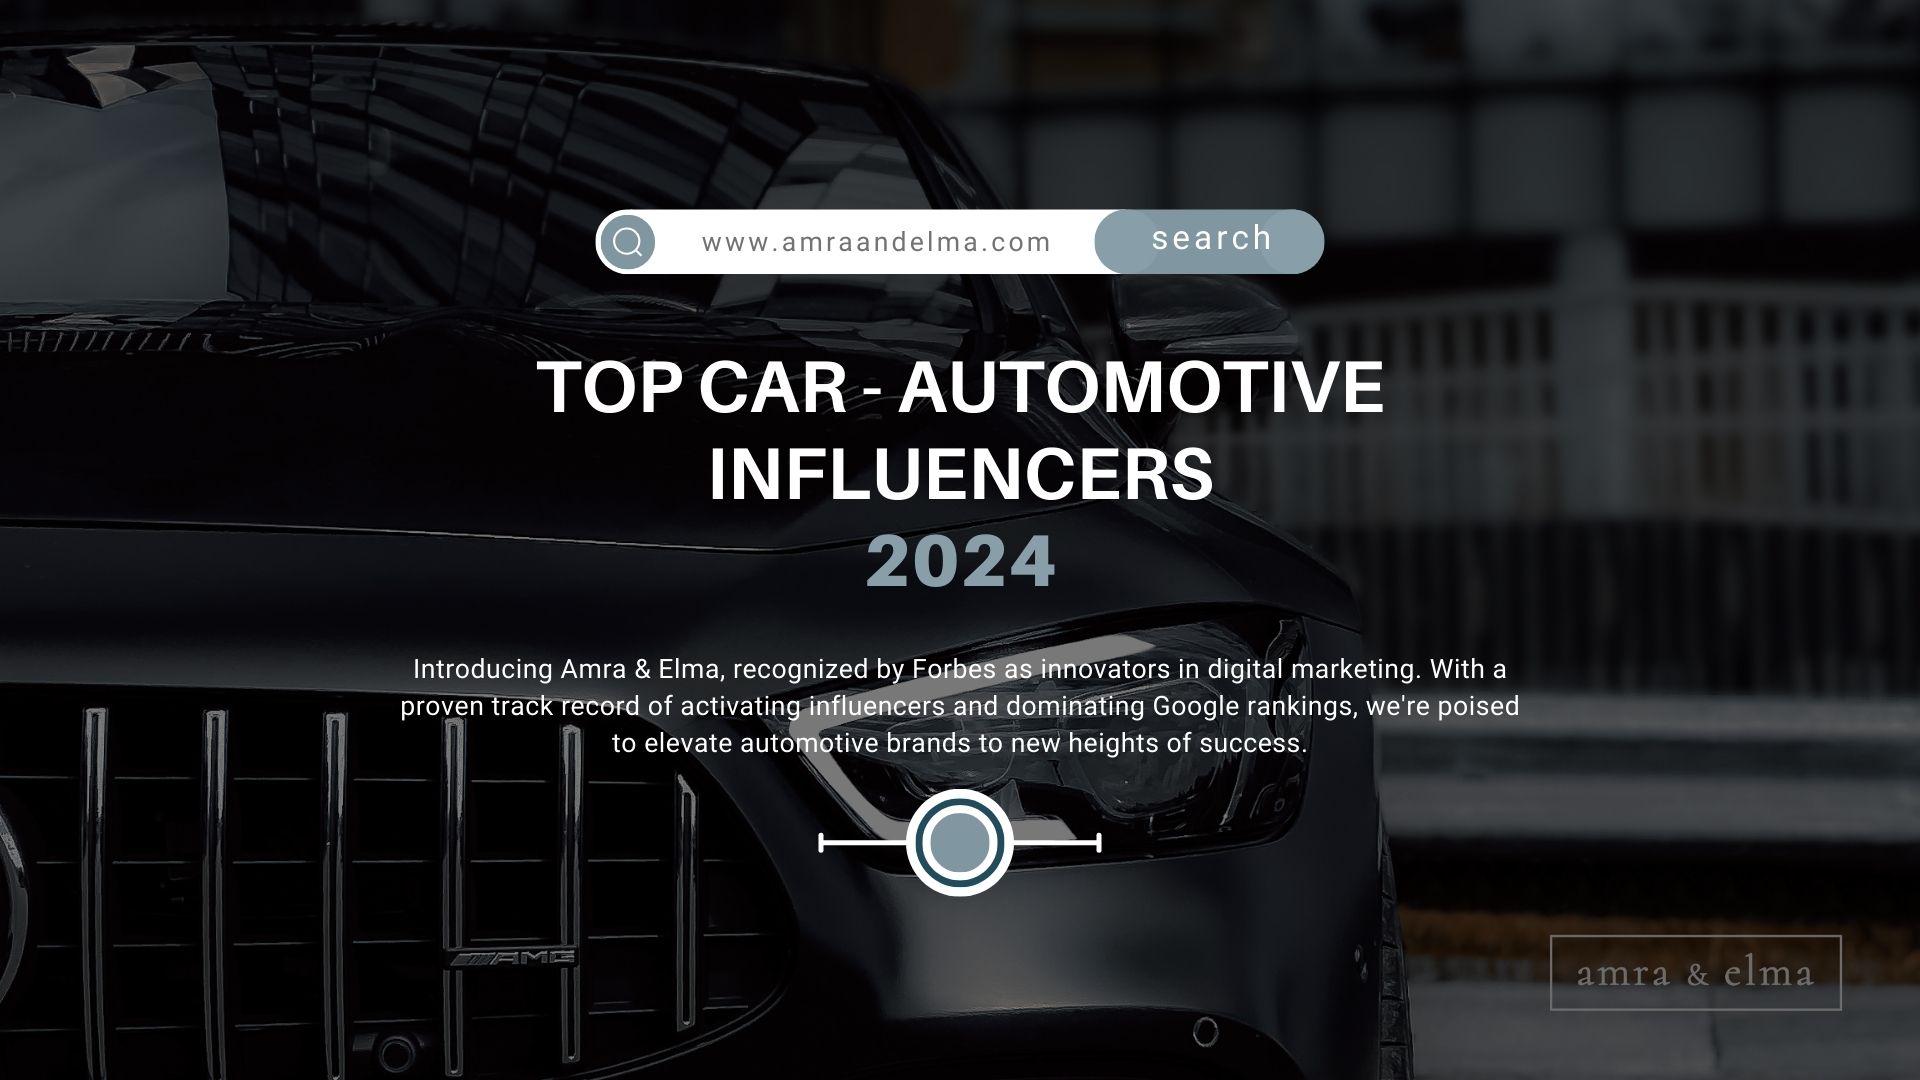 top car influencers, top automotive influencers 2024